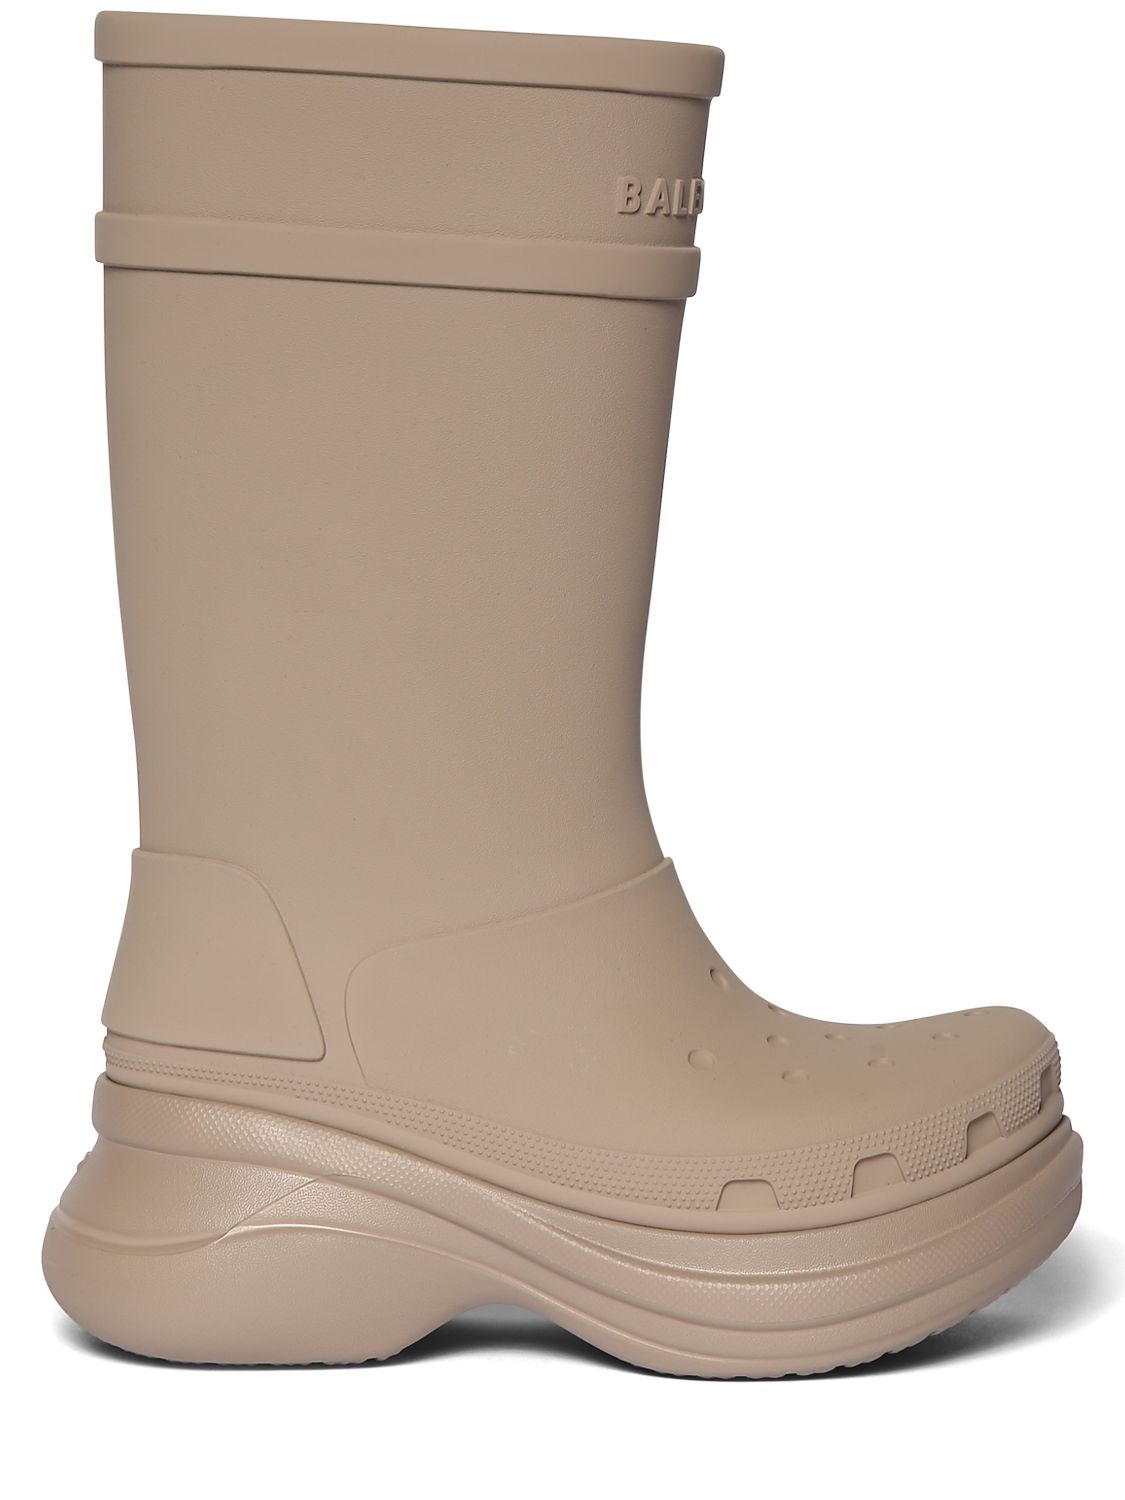 45mm Crocs Rubber Boots